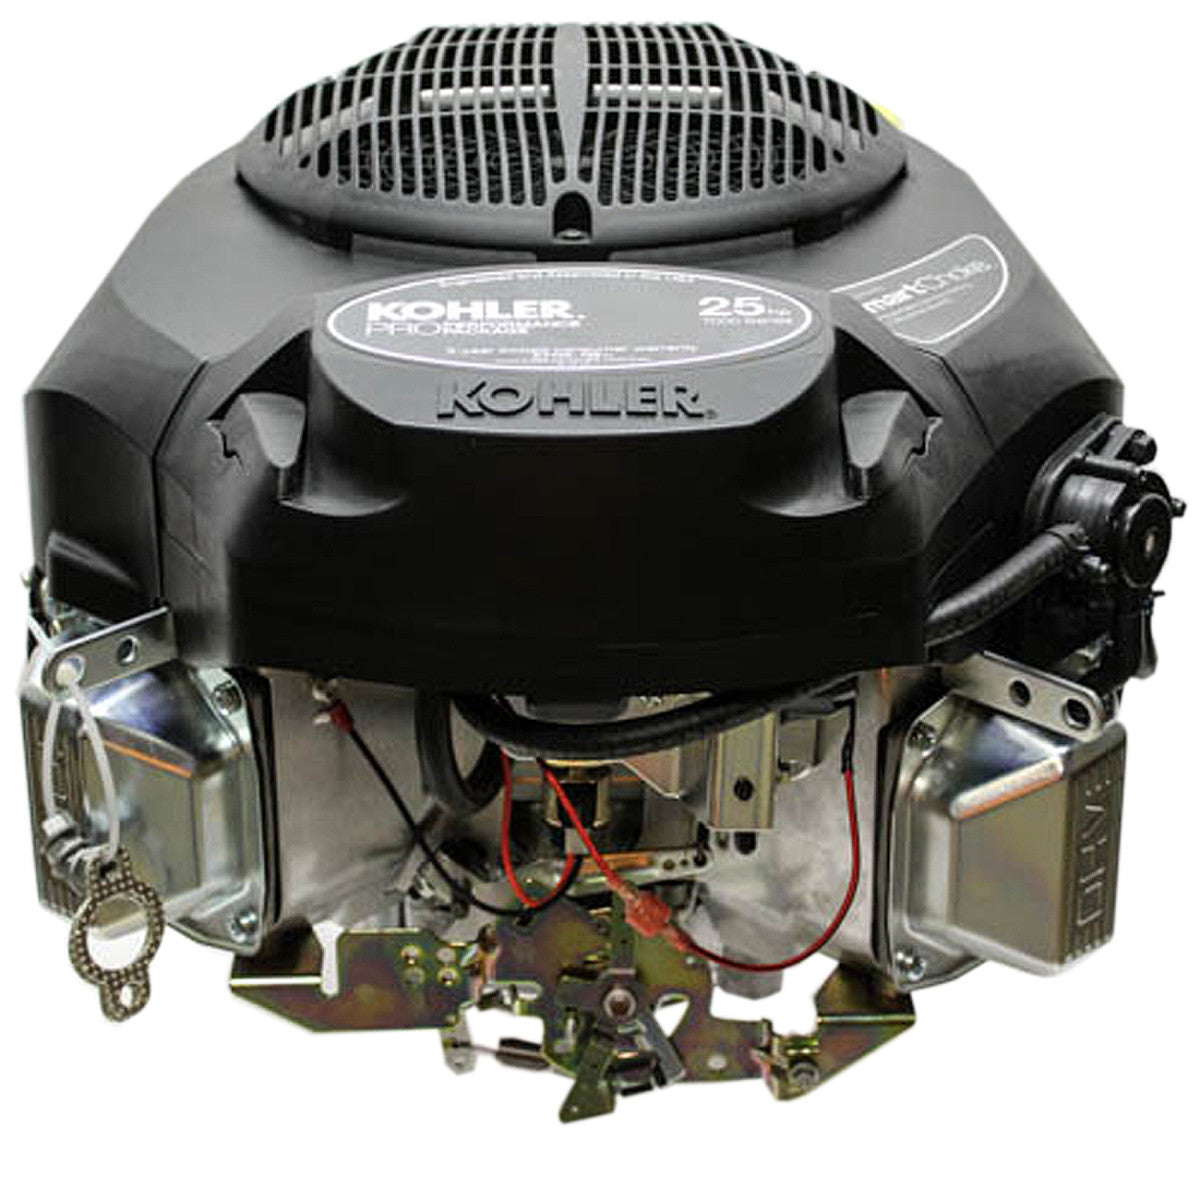 Kohler 7000 Series 25HP Replacement Engine #KT740-3068